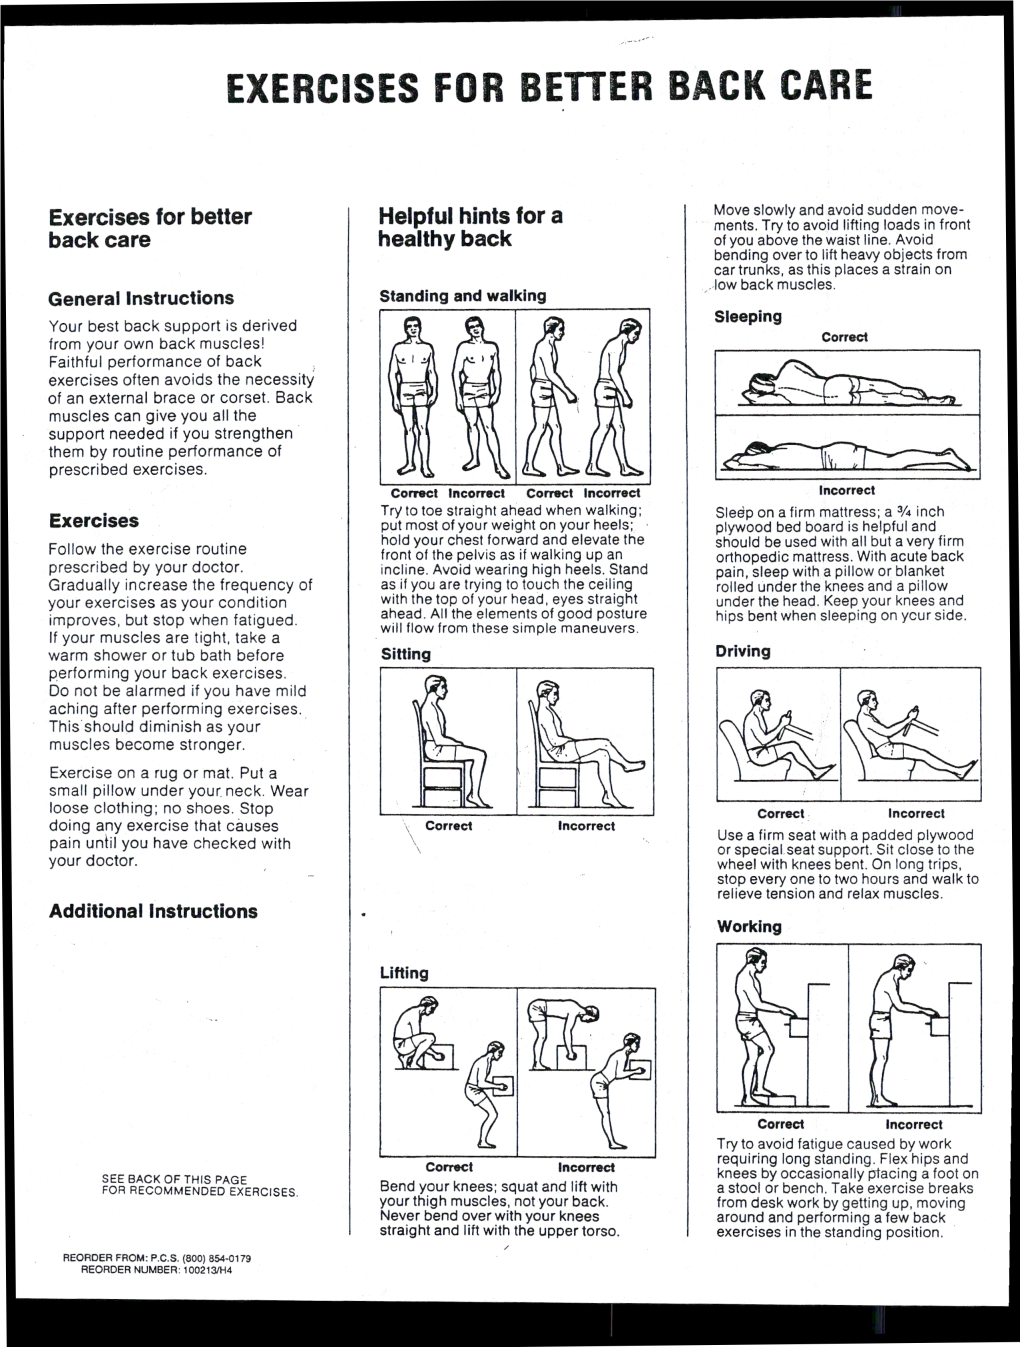 Exercises for Better Back Care